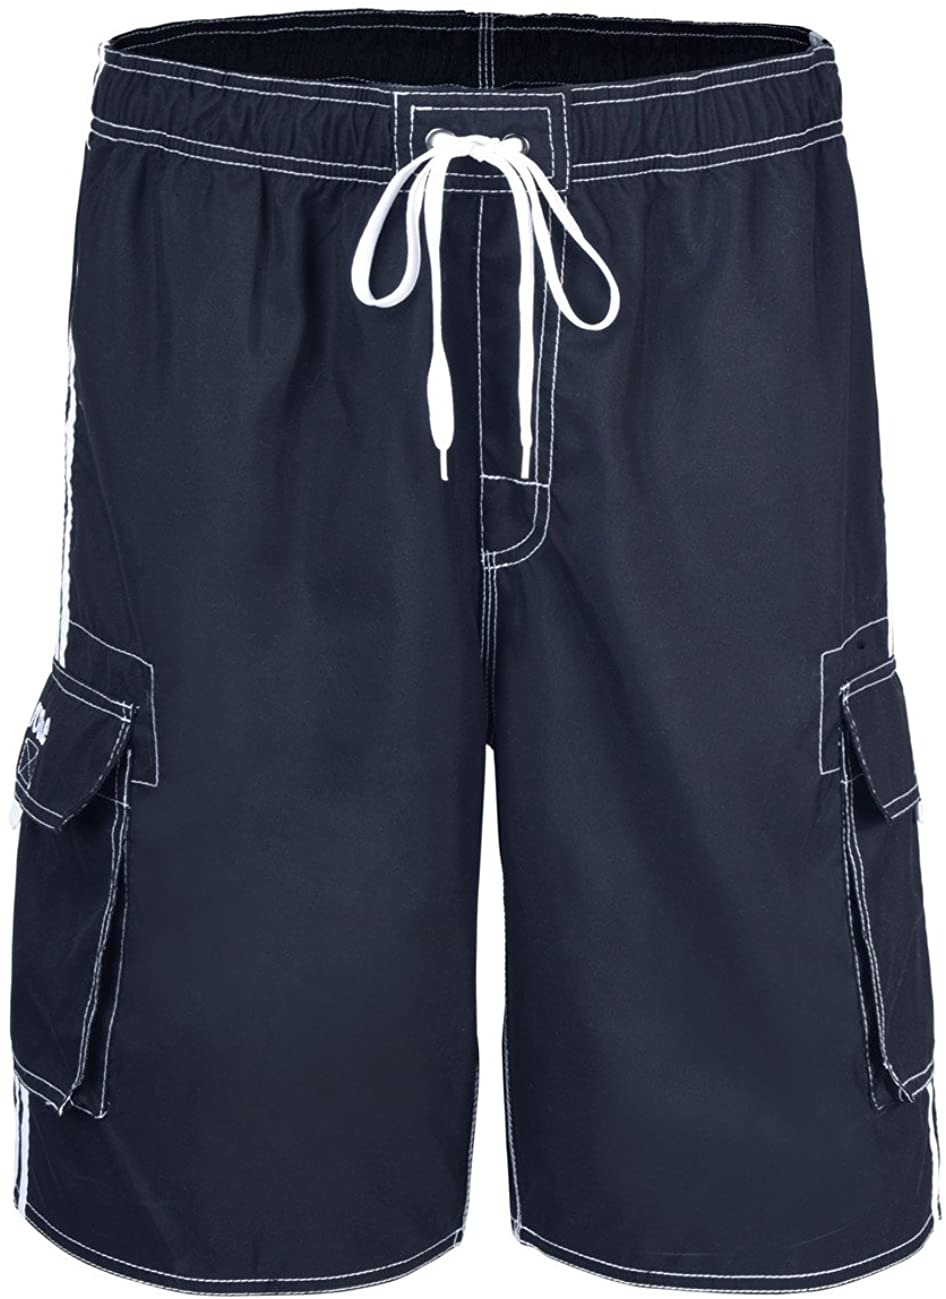 Board Shorts Nonwe Men's Beachwear Board Shorts Quick Dry with Mesh ...